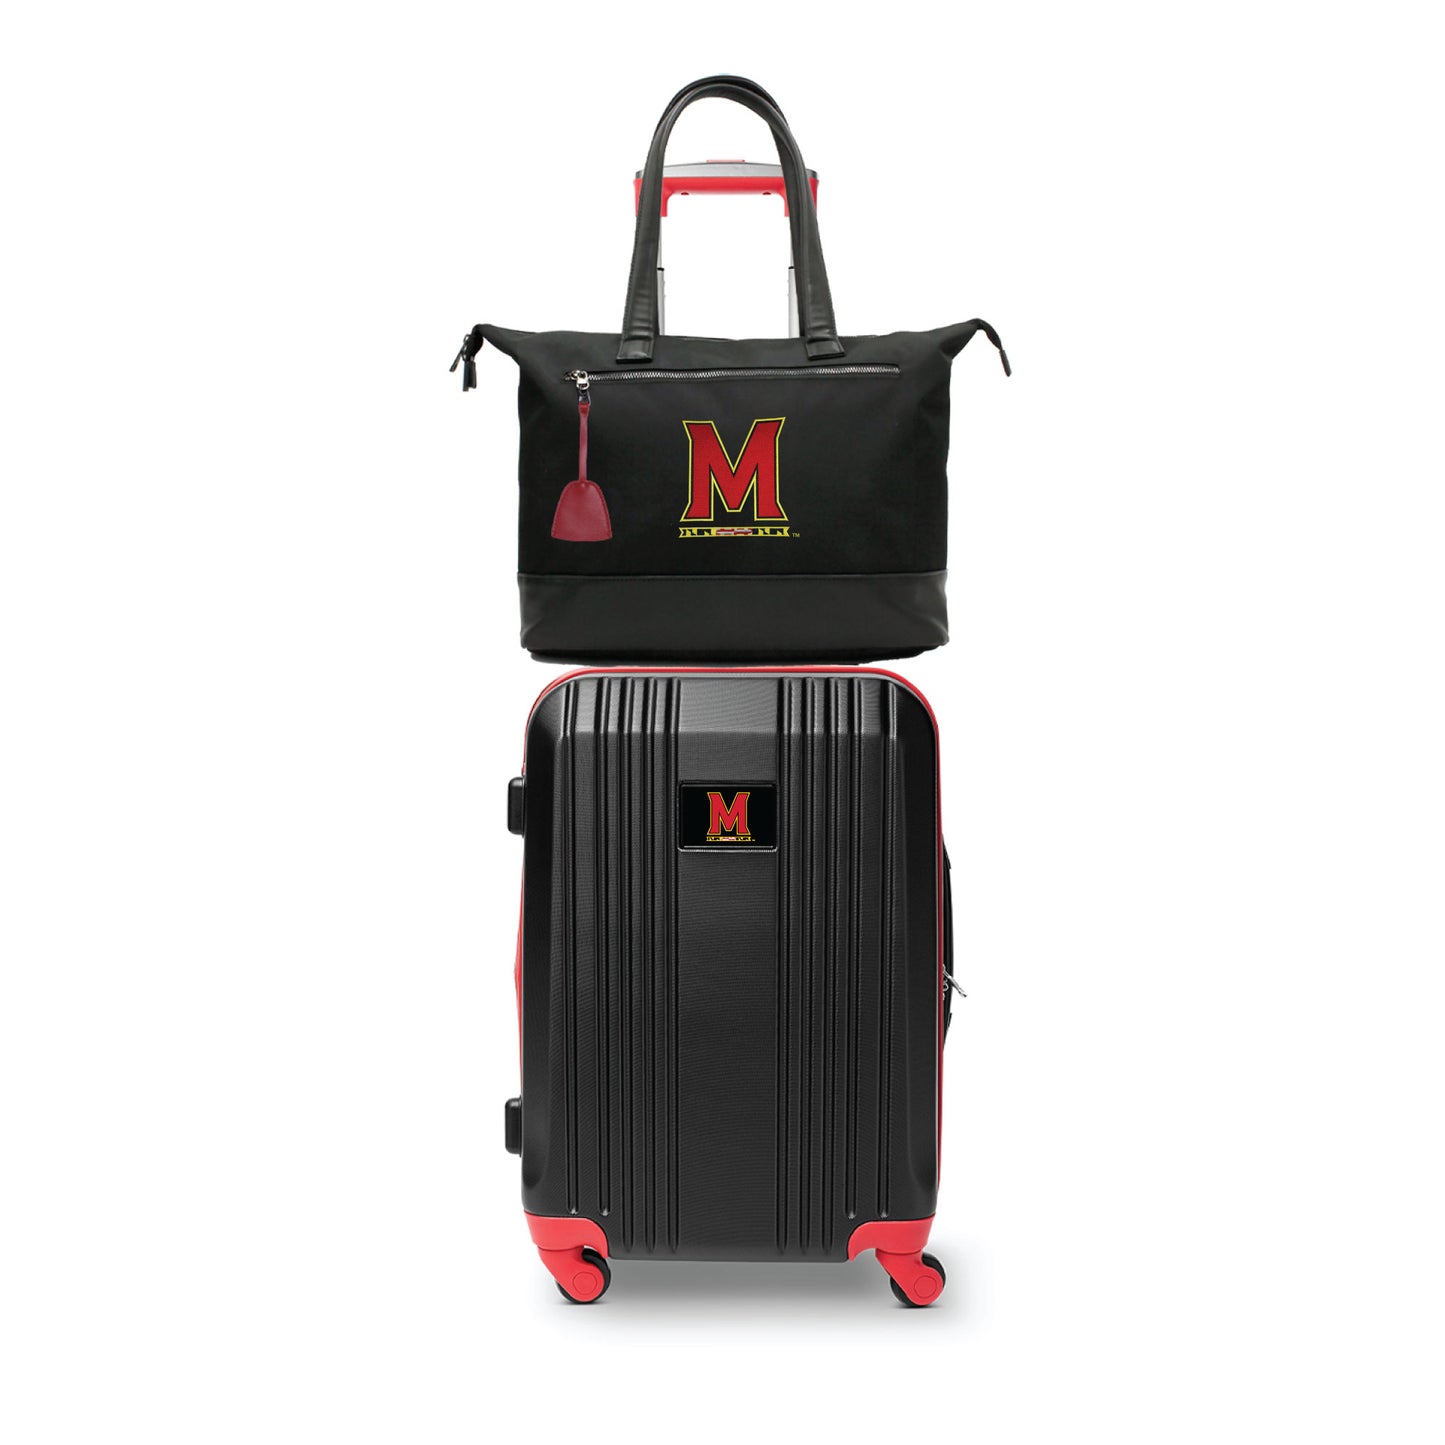 Maryland Terrapins Premium Laptop Tote Bag and Luggage Set